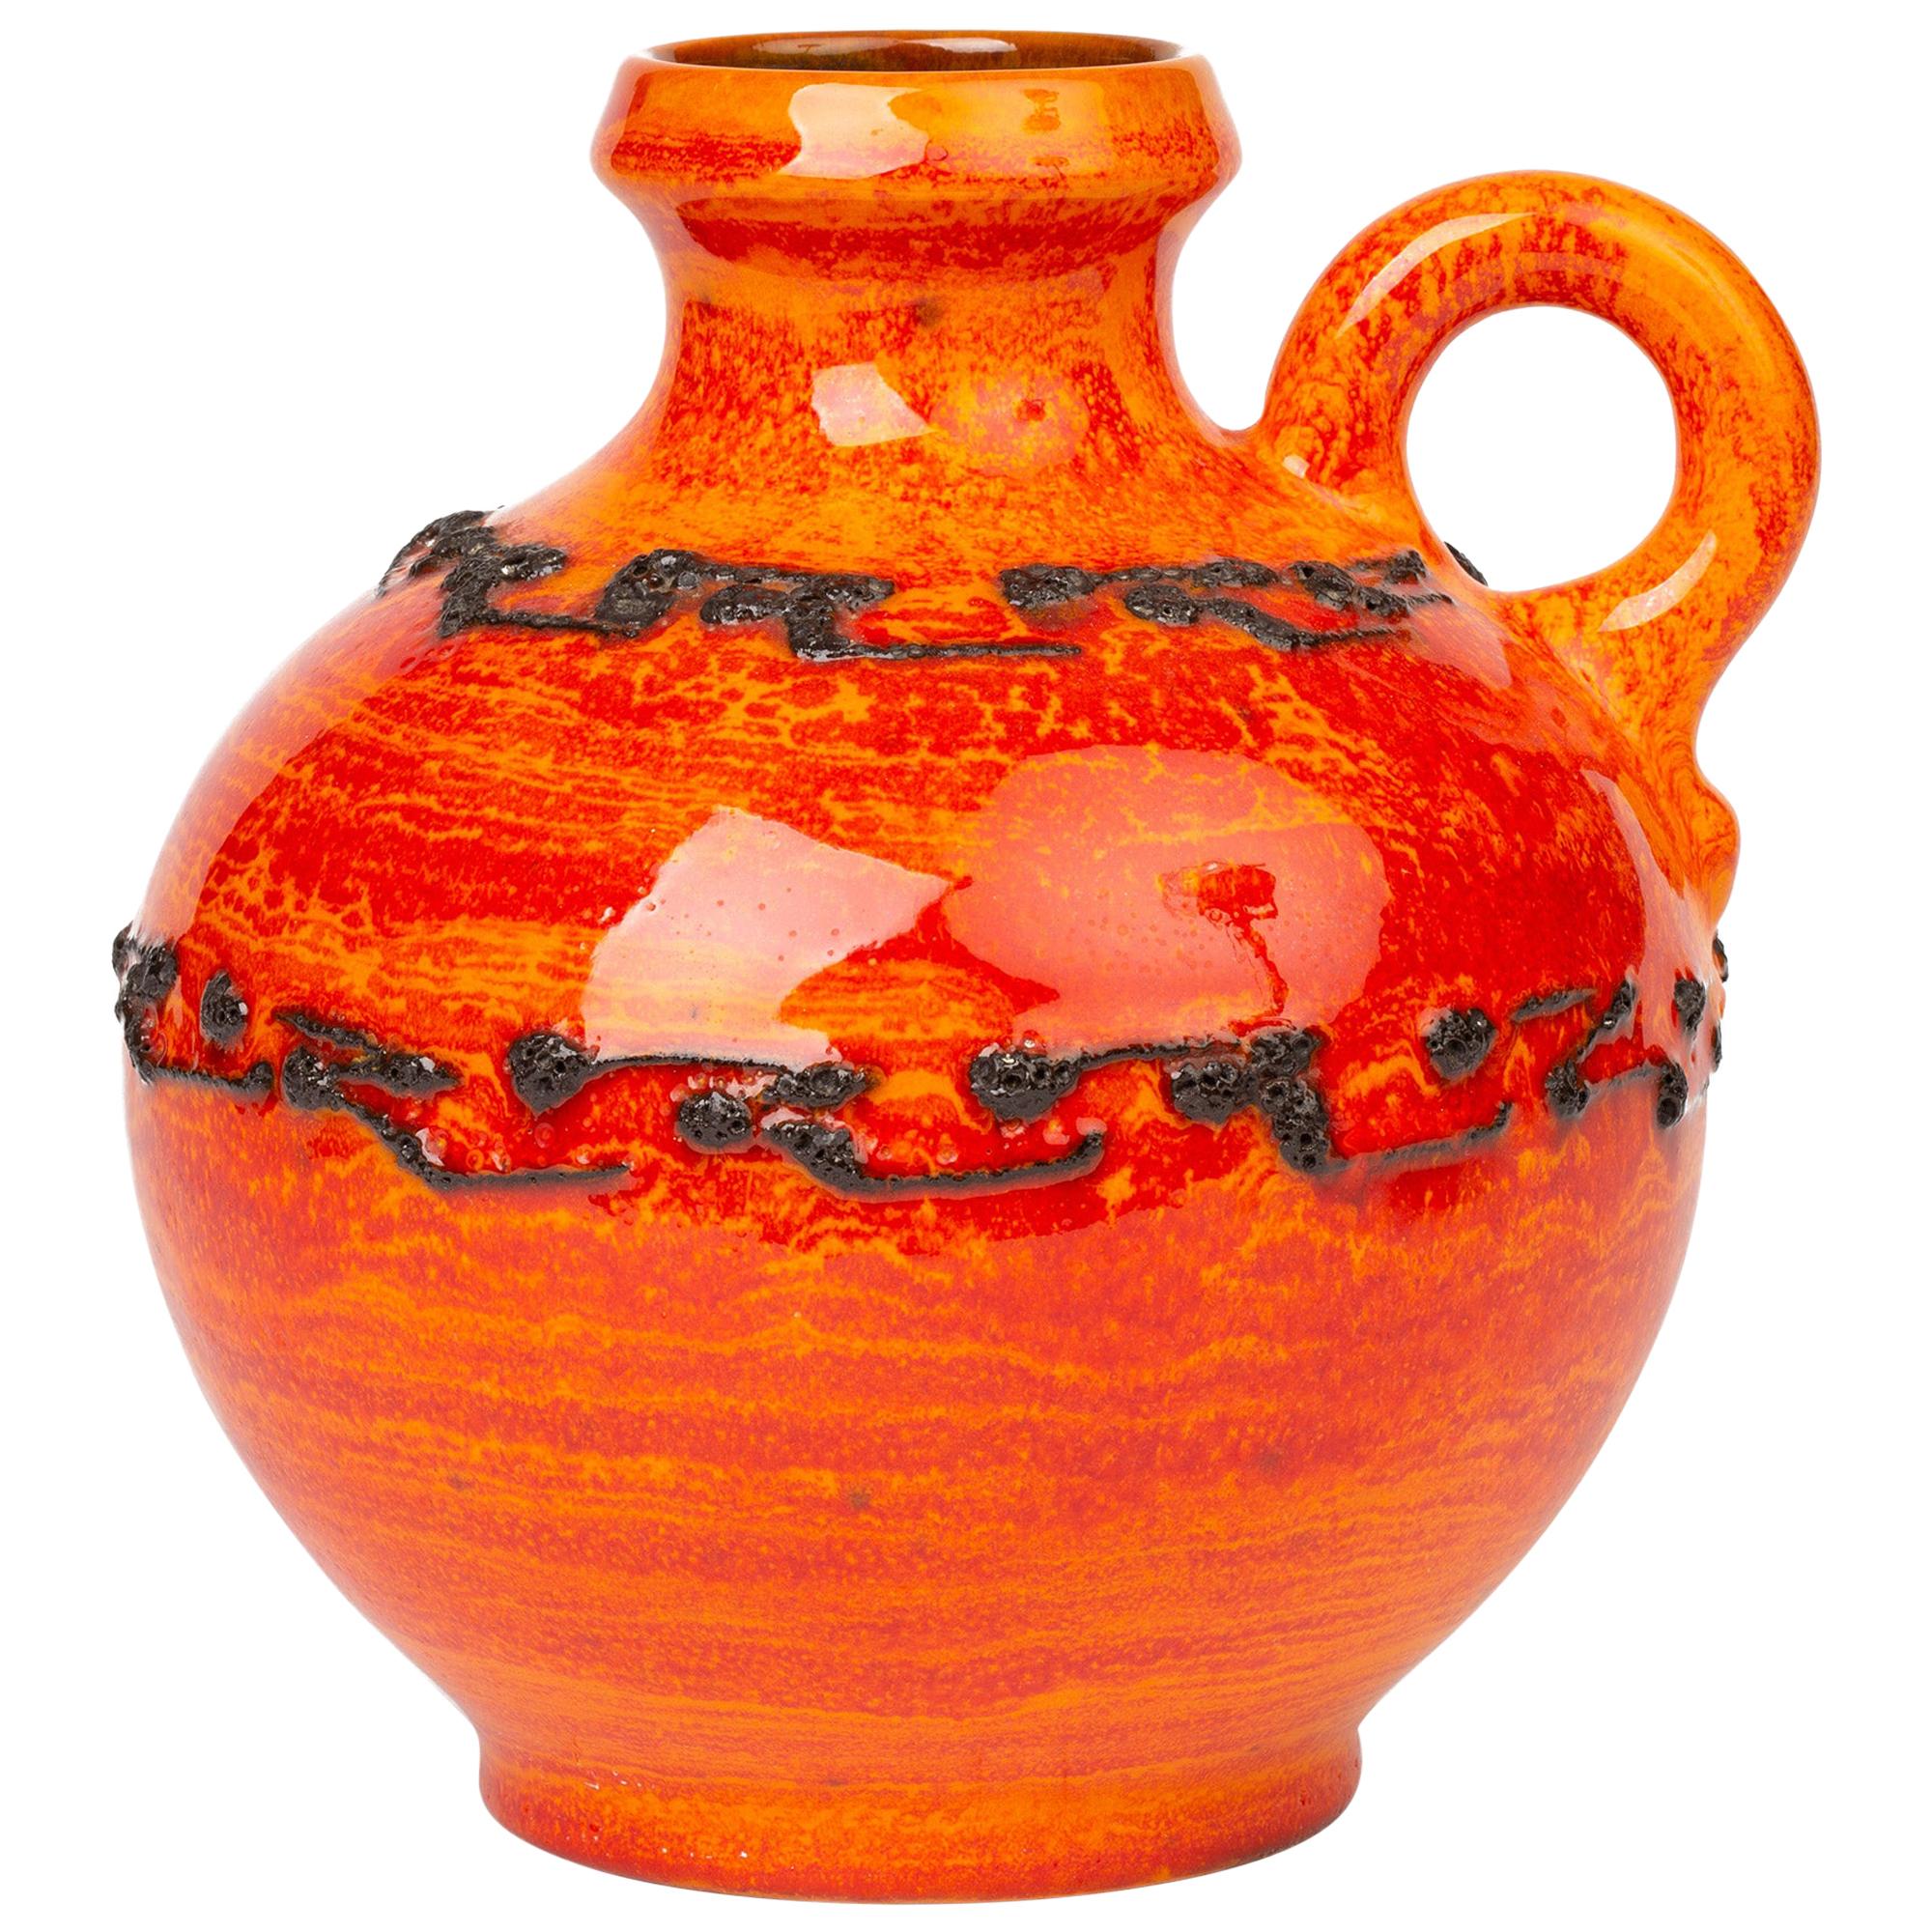 Kreutz Keramik German Midcentury Orange and Red Fat Lava Handled Vase